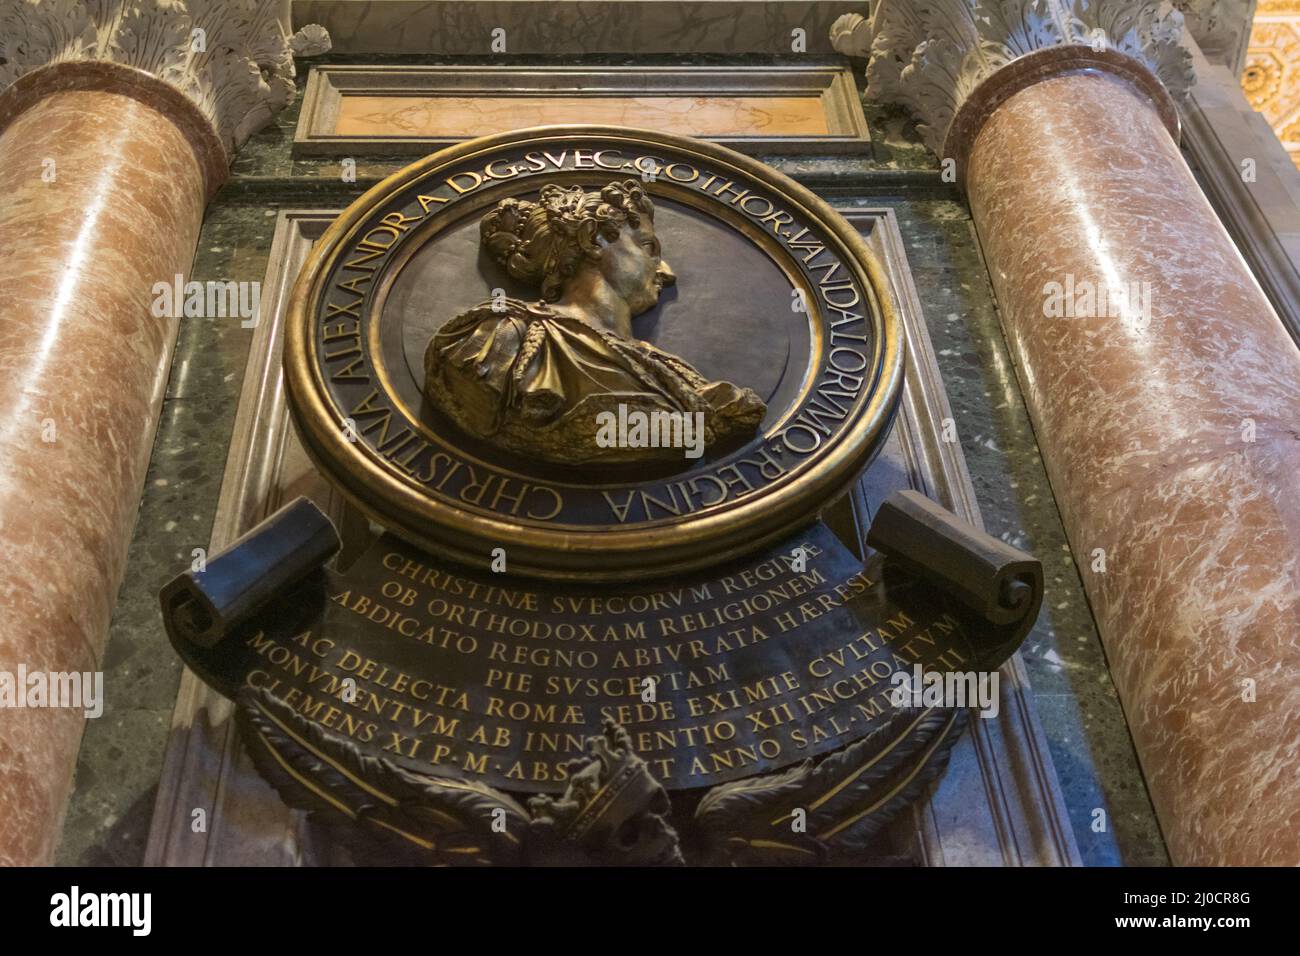 Monument of the Queen Christina Alexandra Svecorv, St. Peter's Basilica, Vatican, Italy Stock Photo